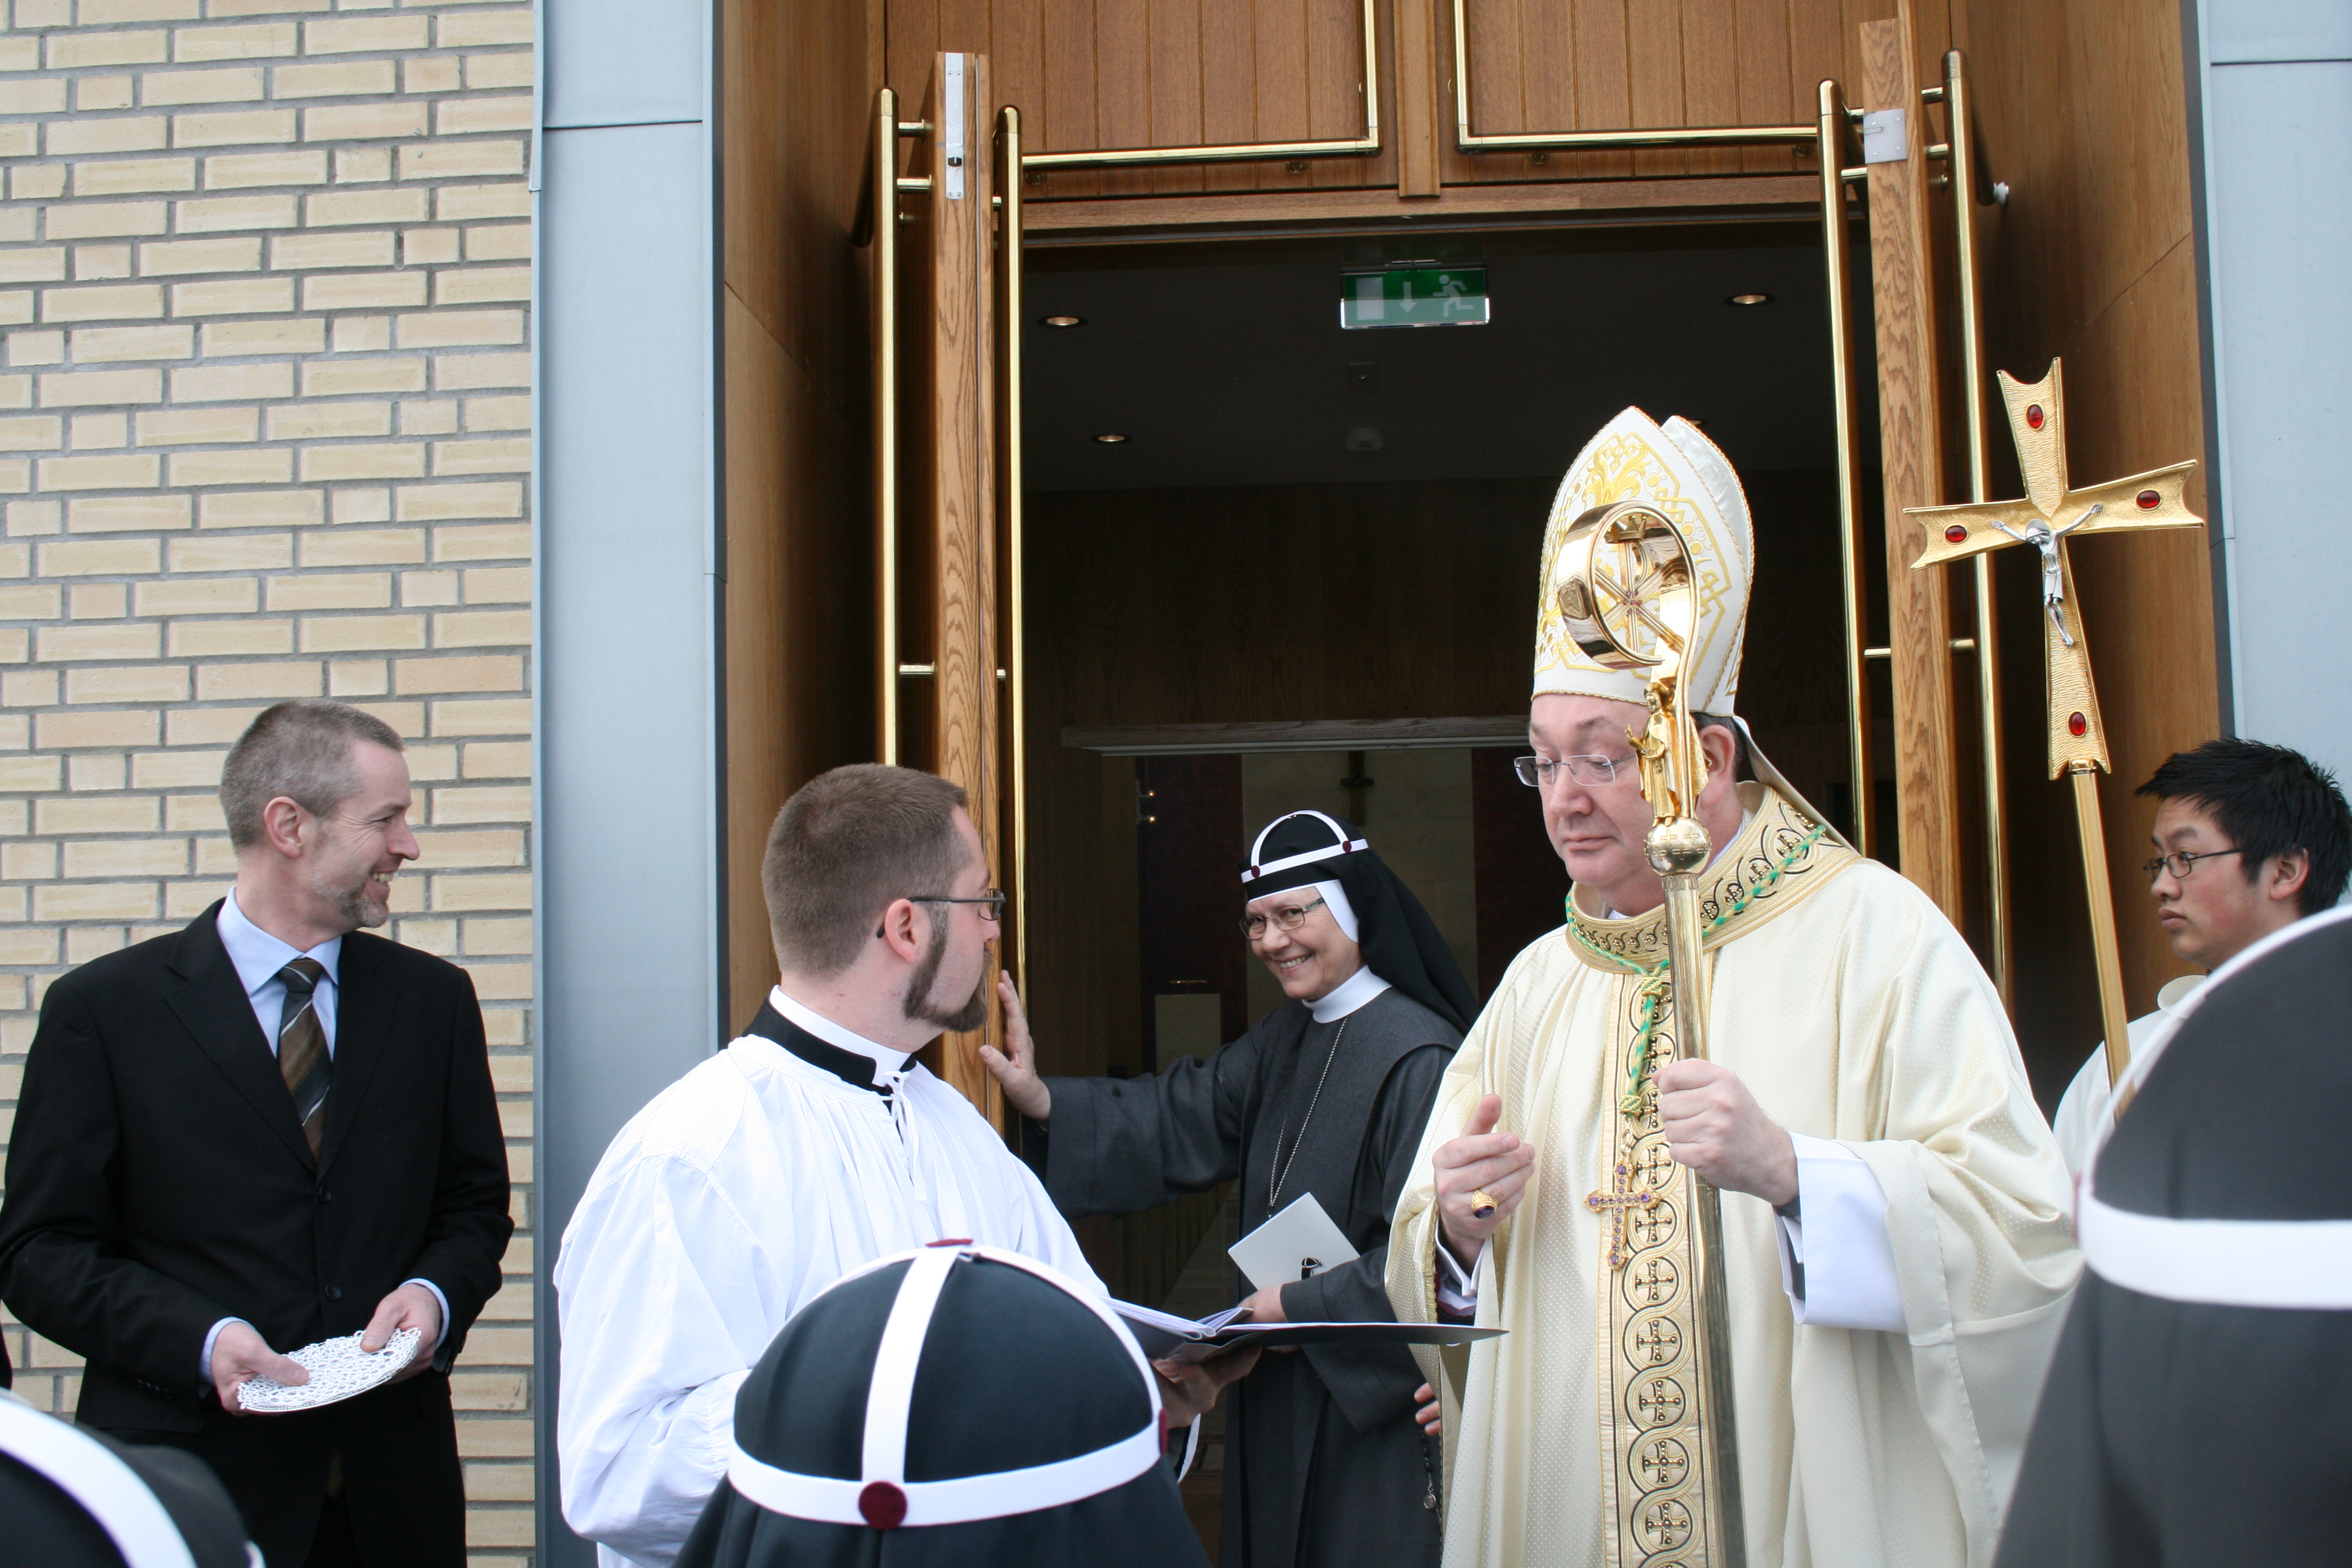 Fra venstre: Arkitekt Lars Meland, pater Fredrik Hansen, moder Tekla Famiglietti og biskop Bernt Eidsvig.